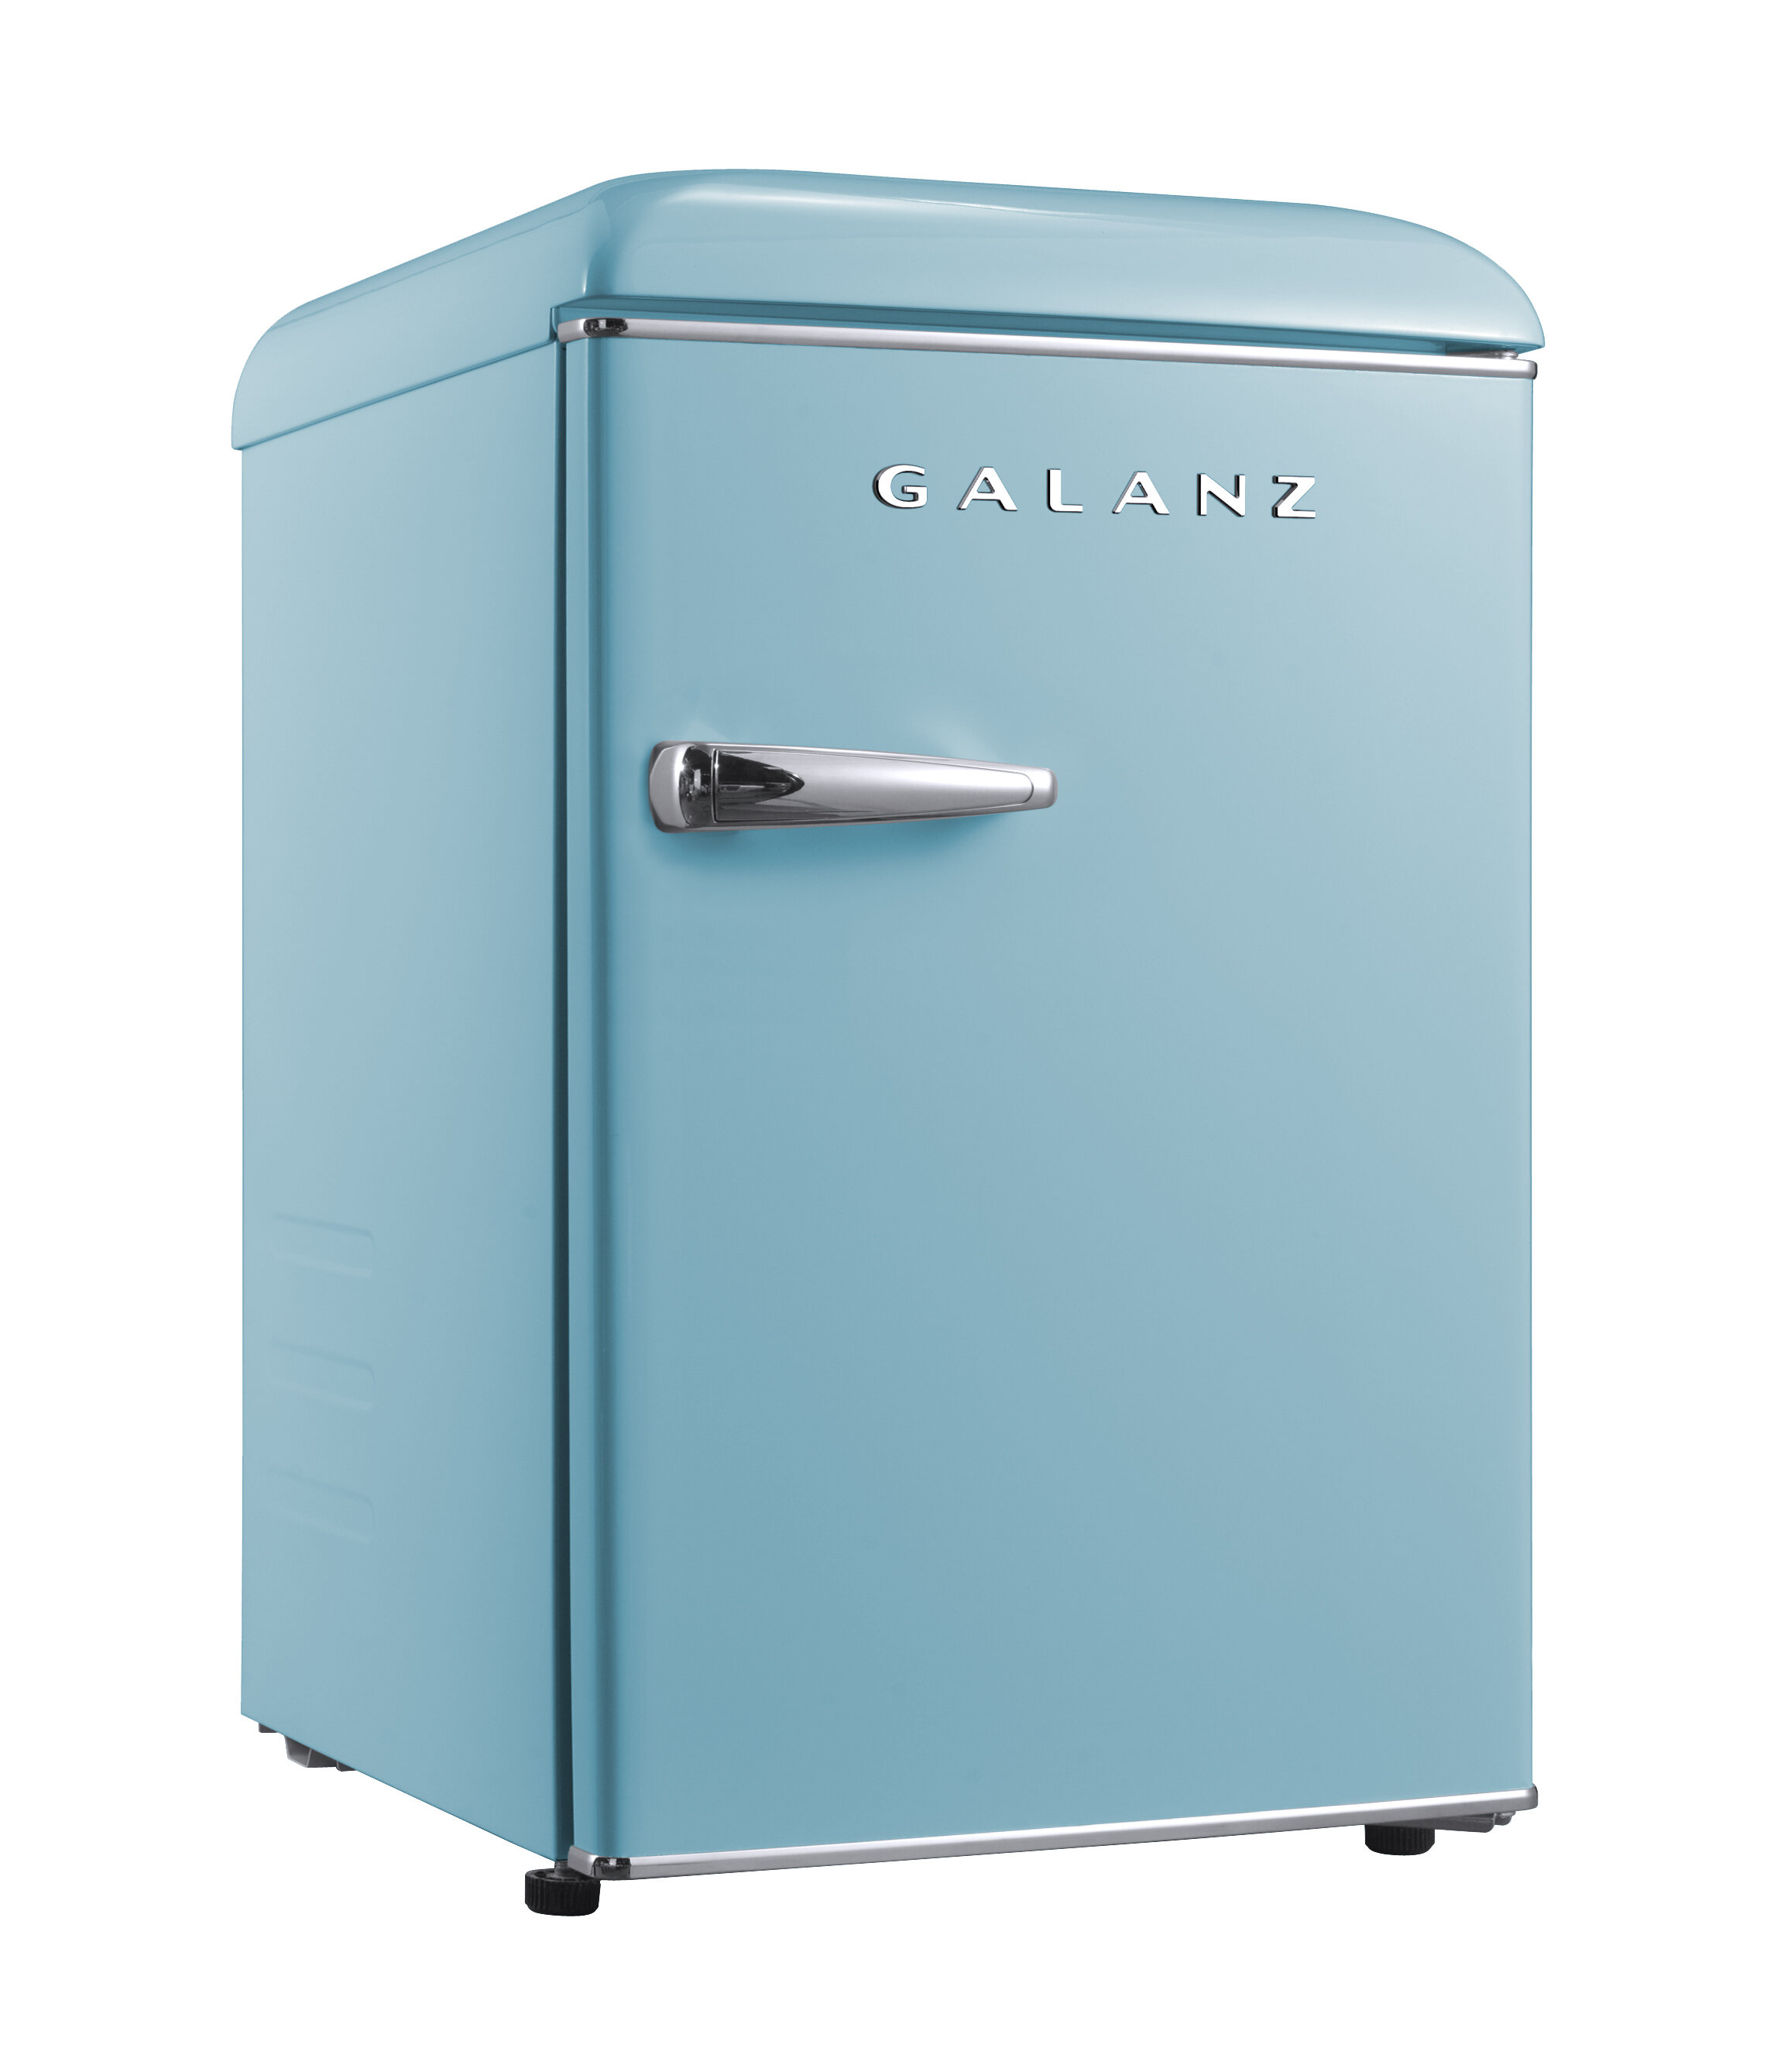 50++ Galanz fridge making noise ideas